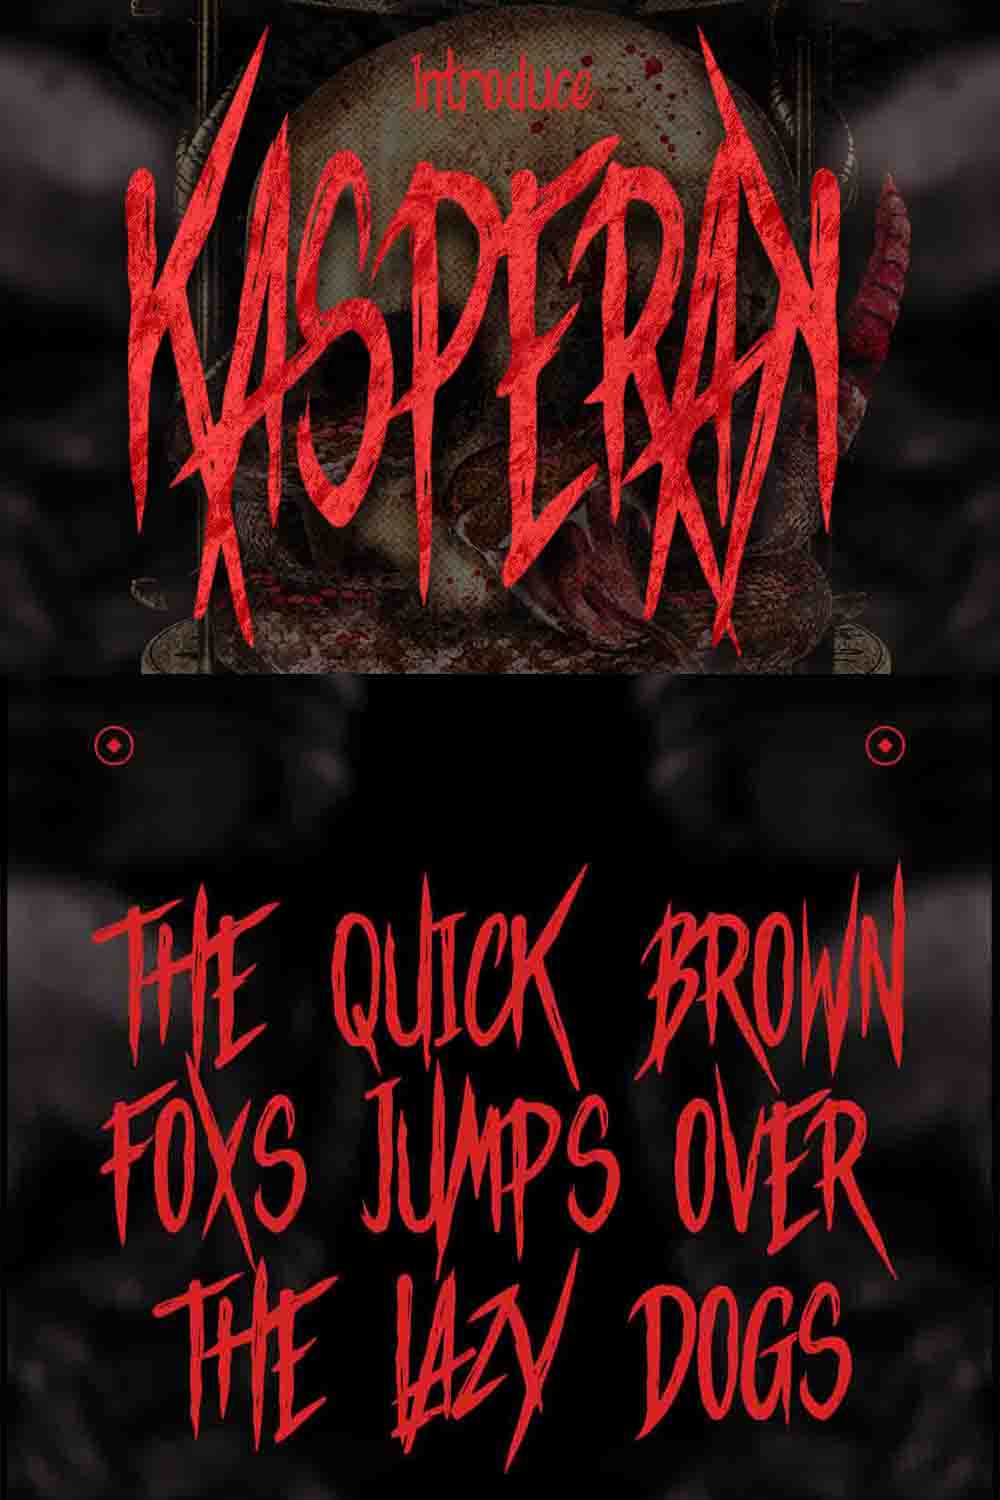 Kasperak - Horror Display Typeface Piinterest Collage image.